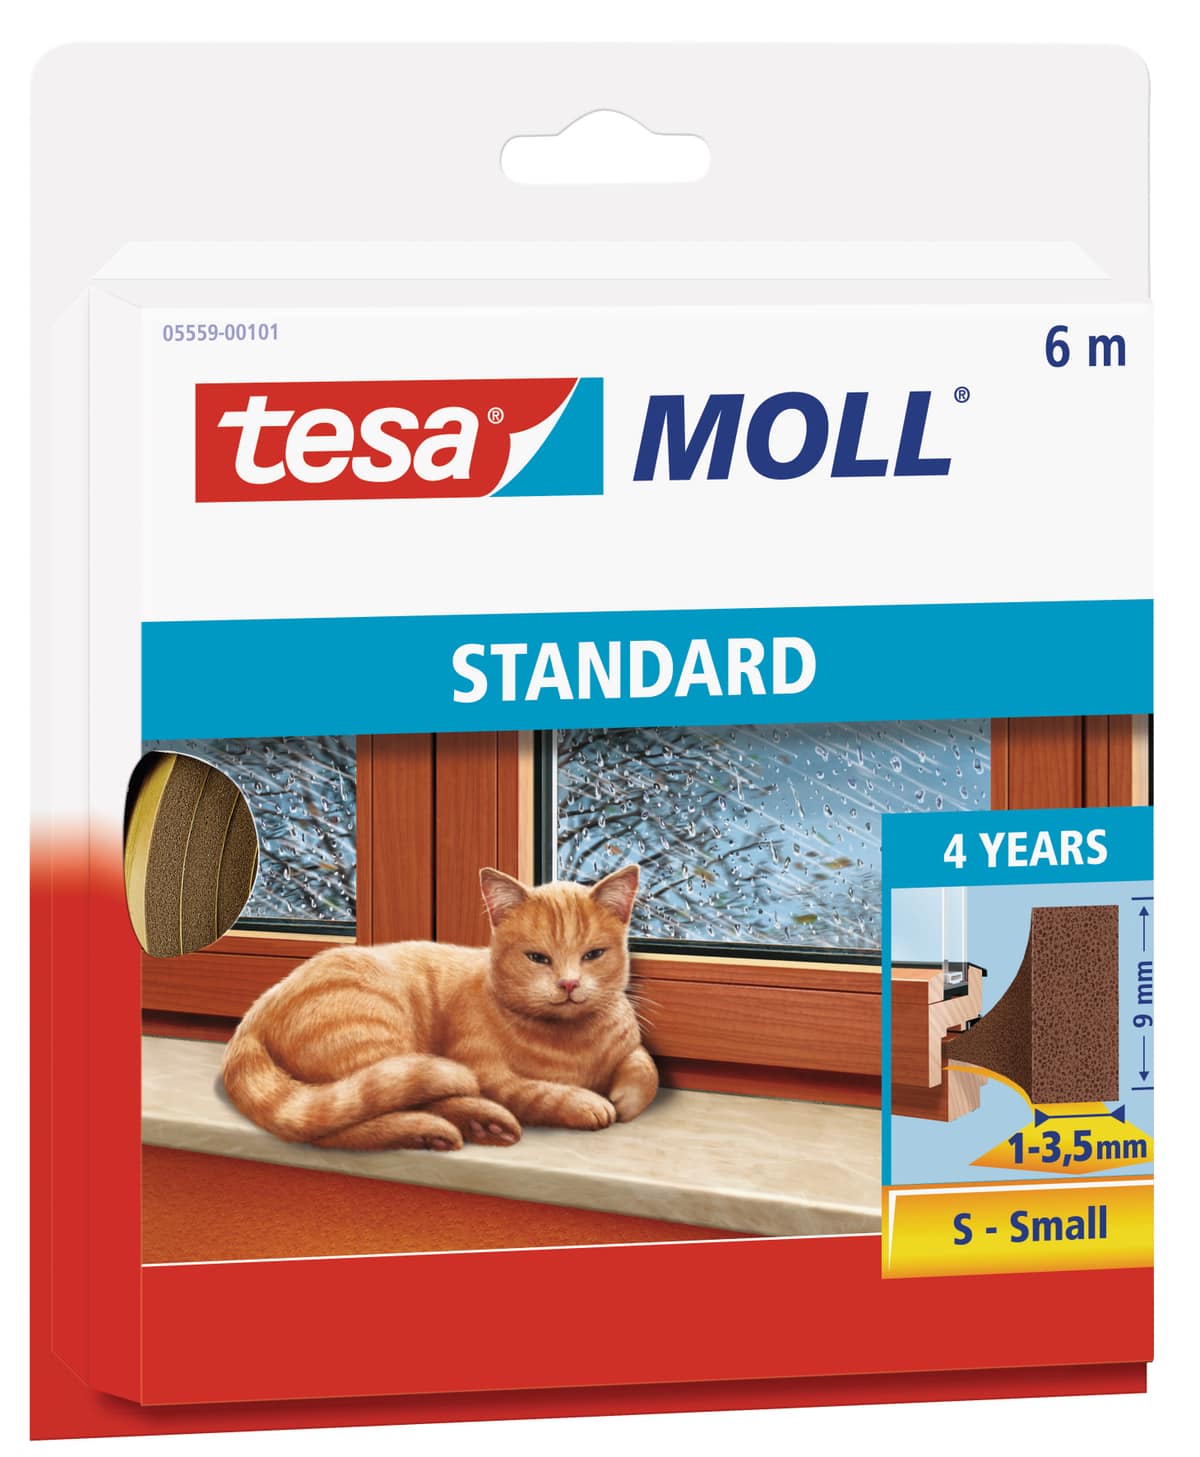 TESA tesamoll® STANDARD I-Profil Schaumstoffdichtband, 9 mm x 6 m, braun von Tesa